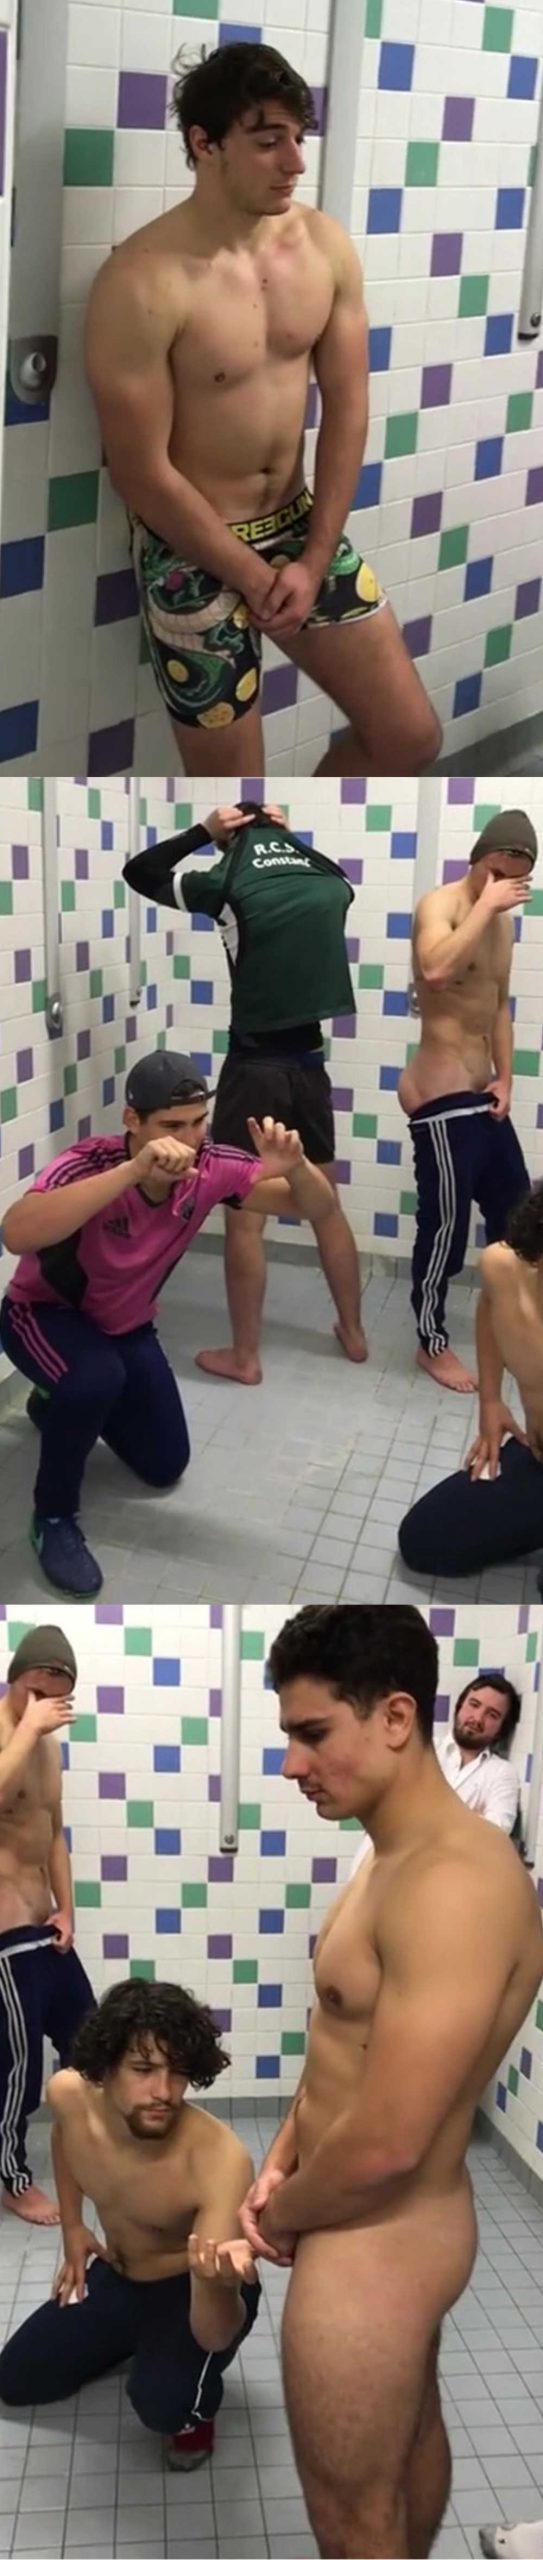 naked sportsmen in shower mannequin challenge